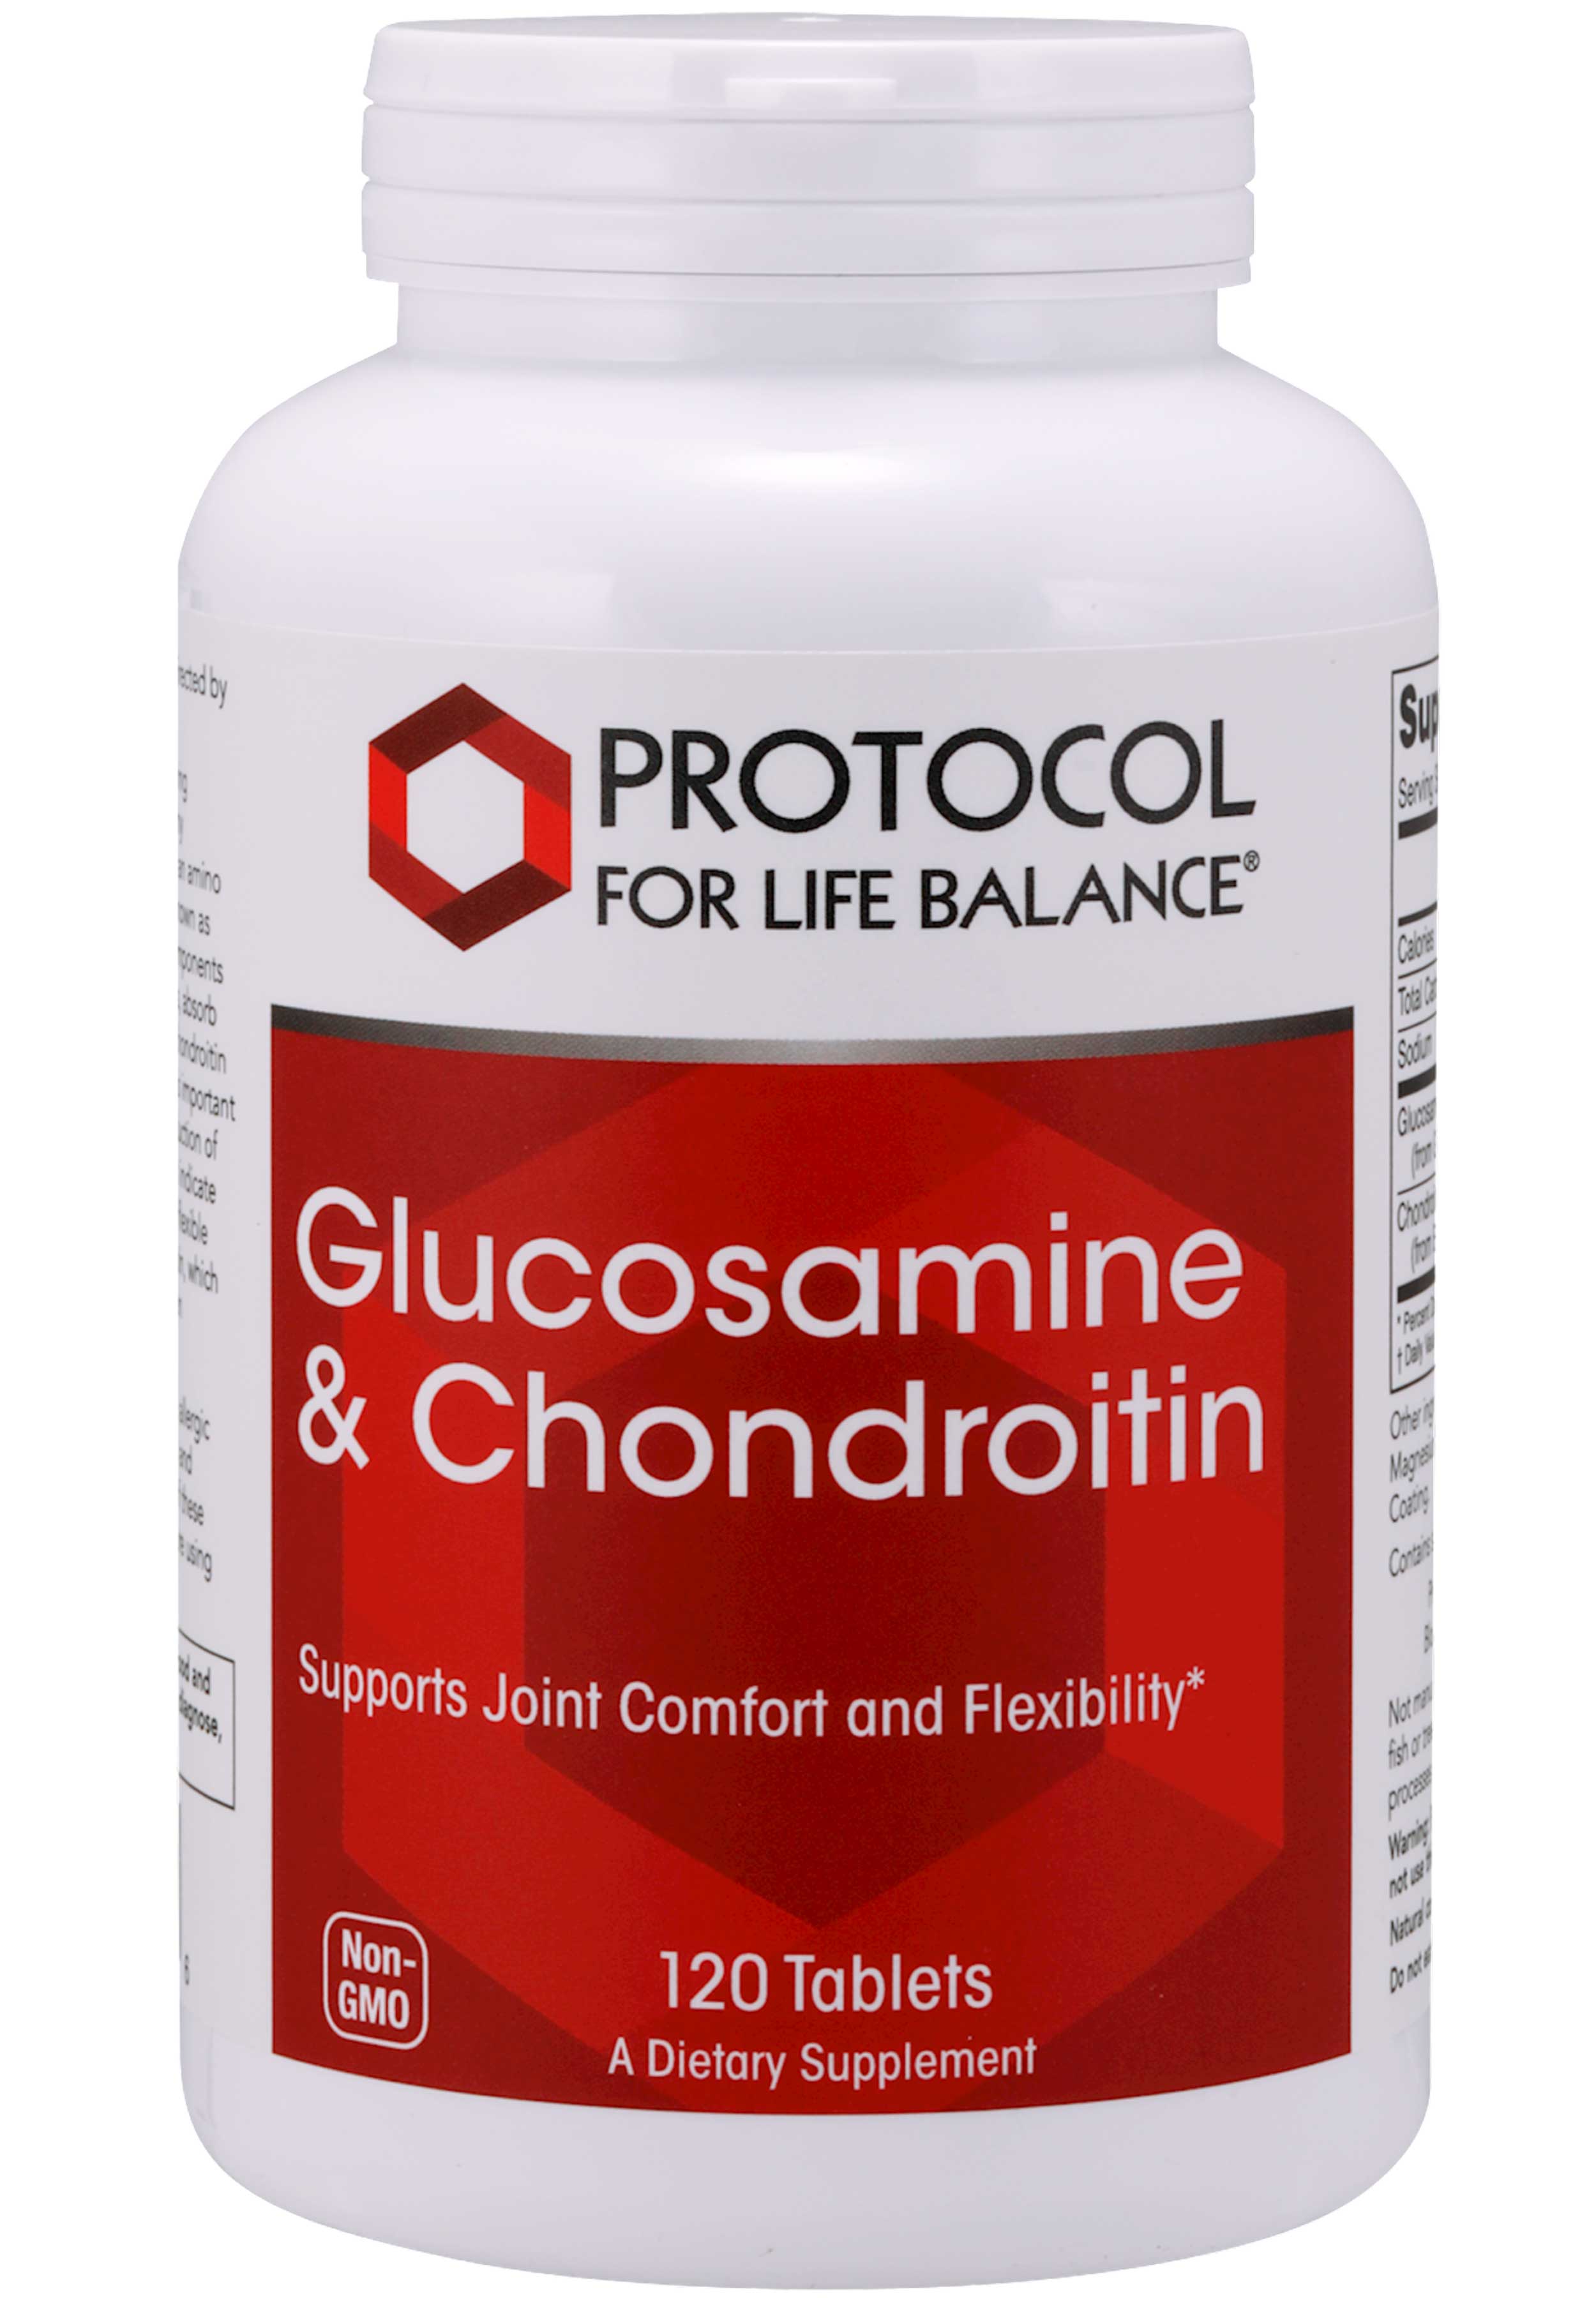 Protocol for Life Balance Glucosamine & Chondroitin